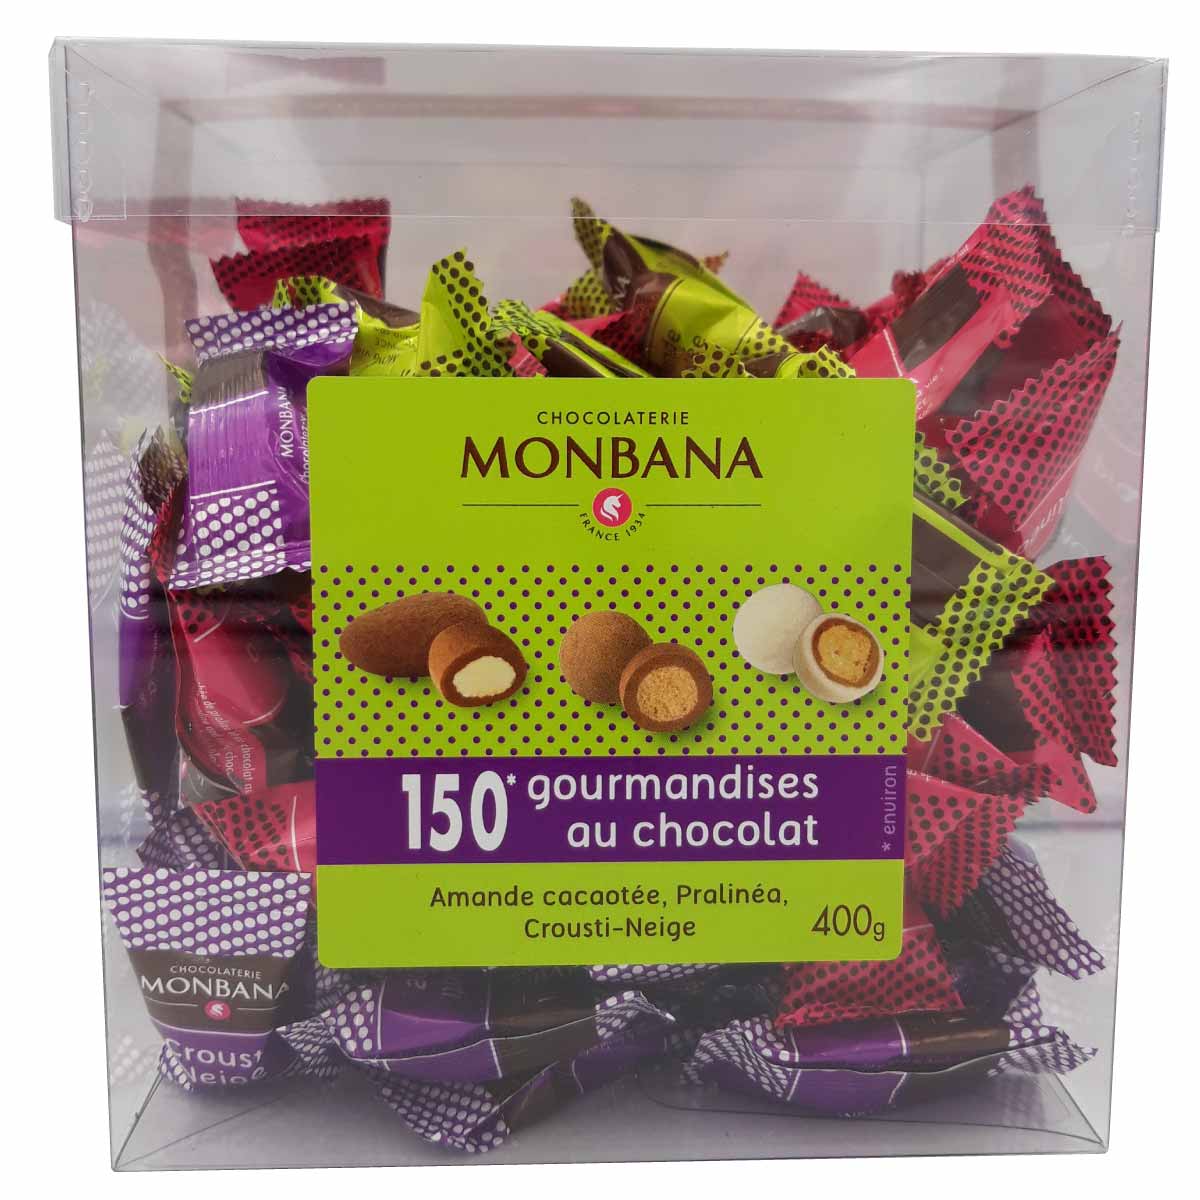 360g gourmandises au chocolat - Monbana